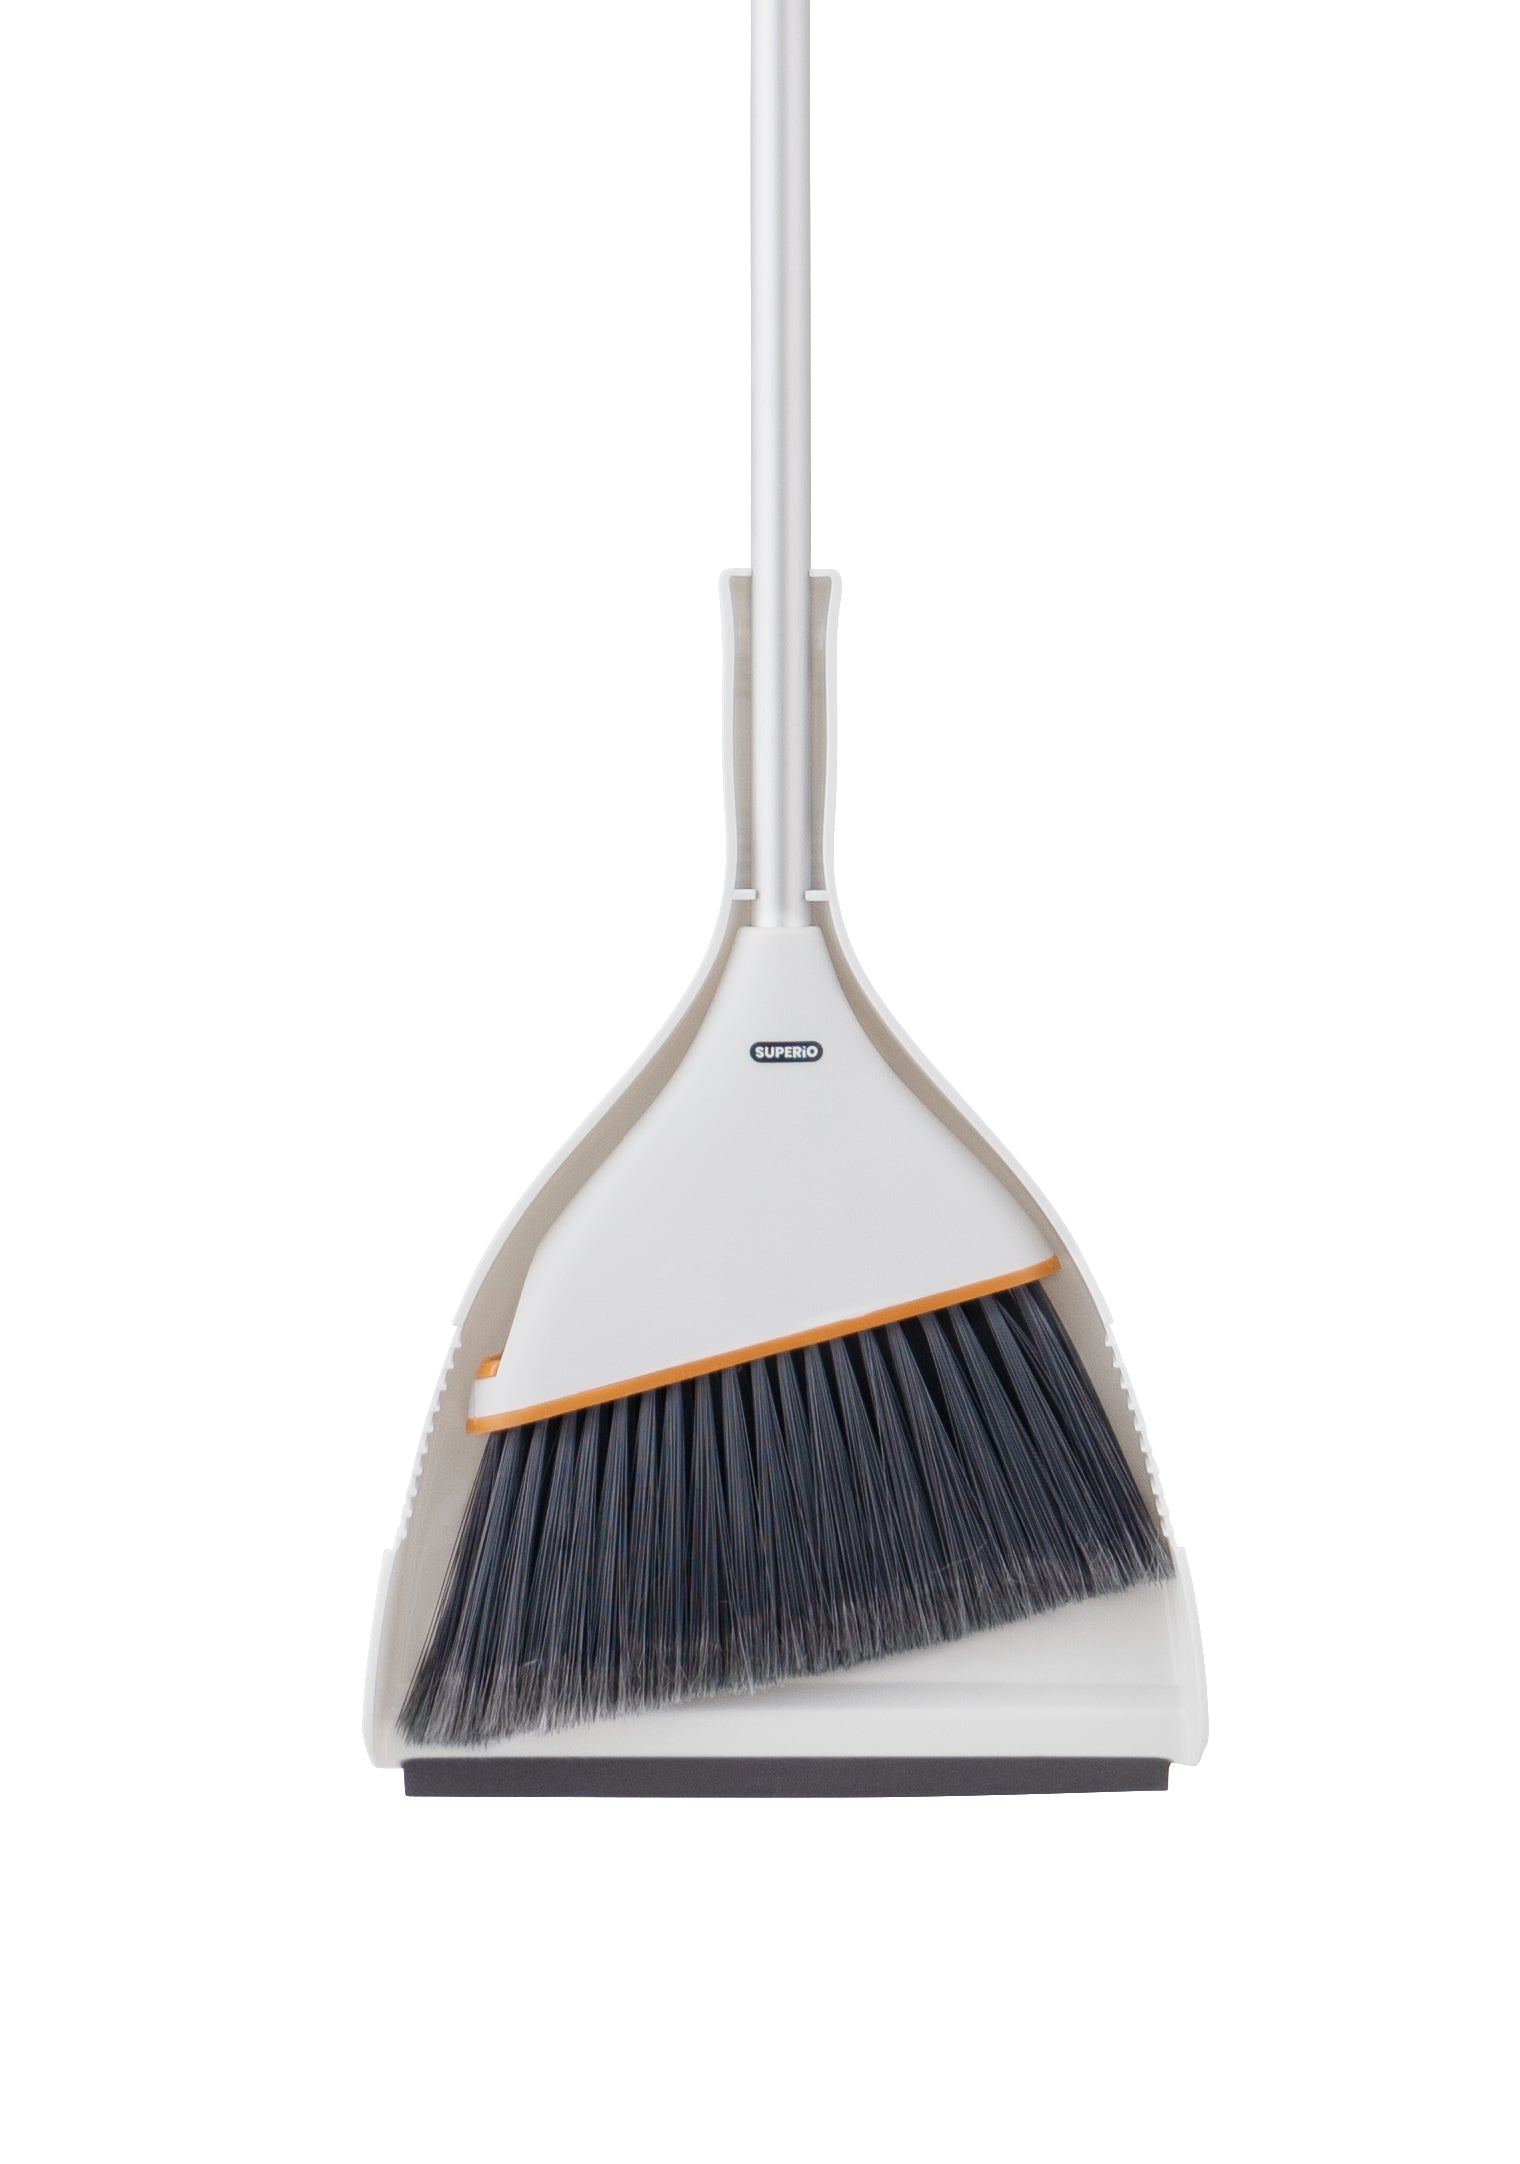 11 in. Gray/Orange Upright Broom and Dustpan Set